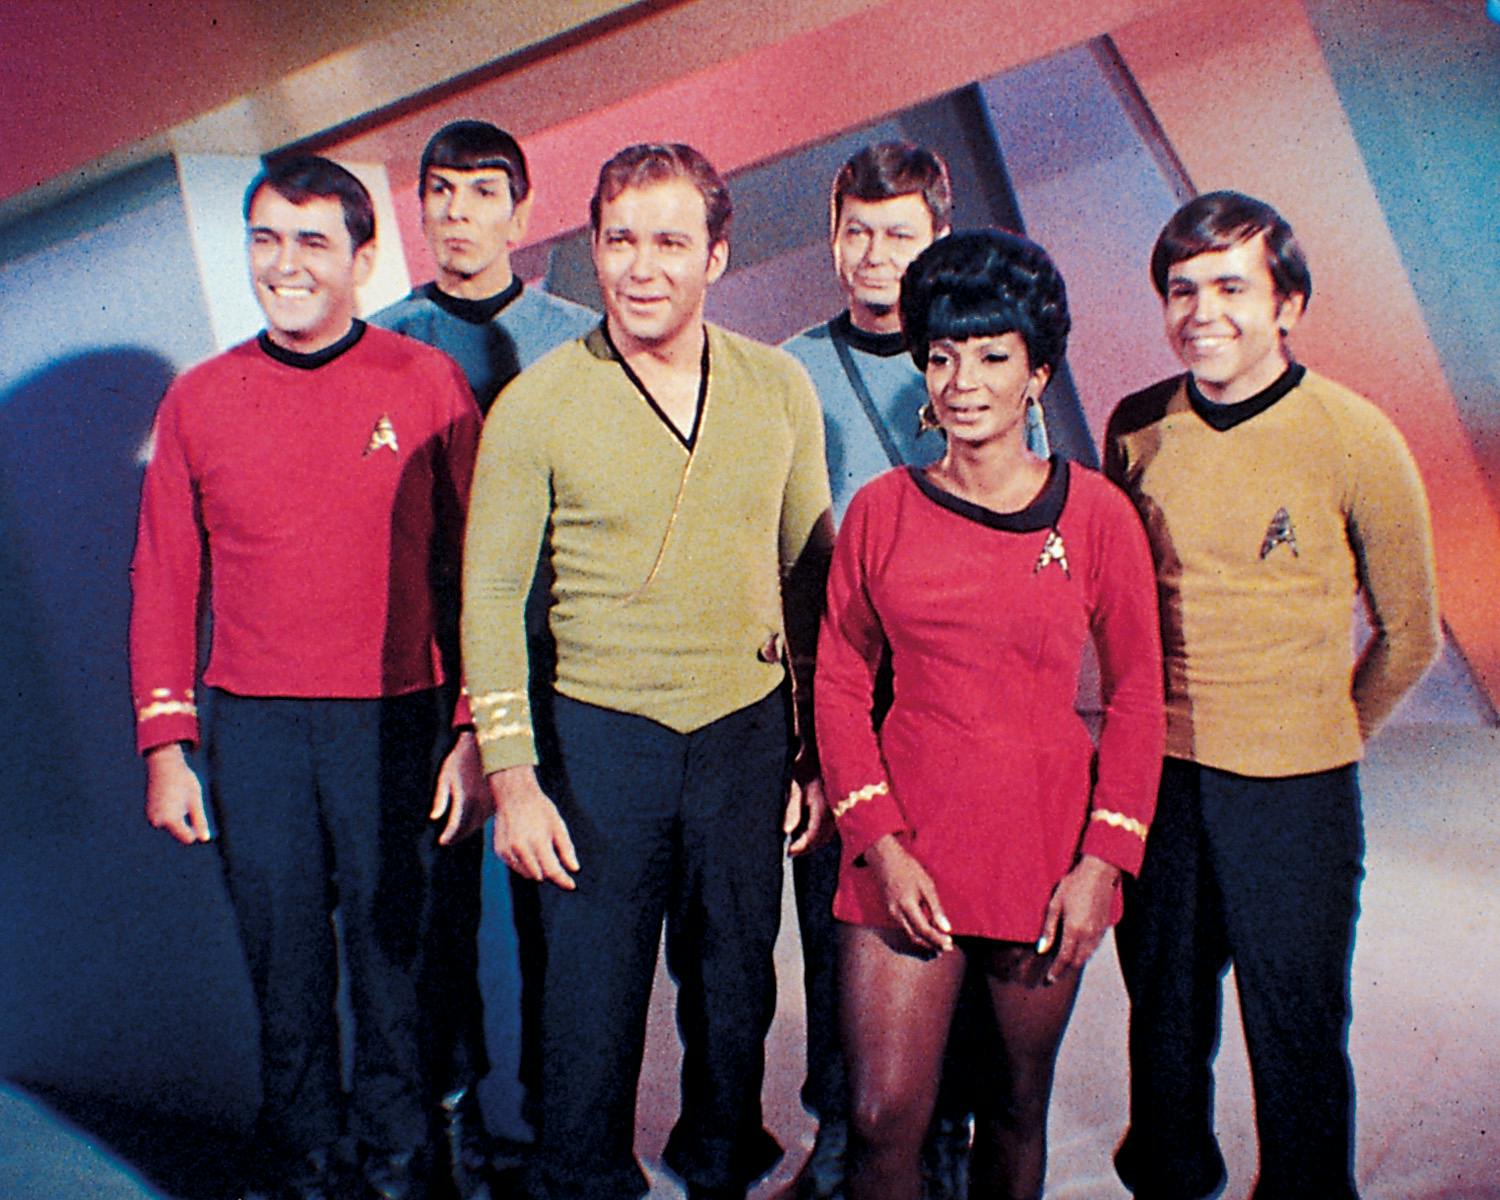 Star Trek: The Original Series cast group photo (Scotty, Spock, James Kirk, Bones, Uhura, and Chekov)